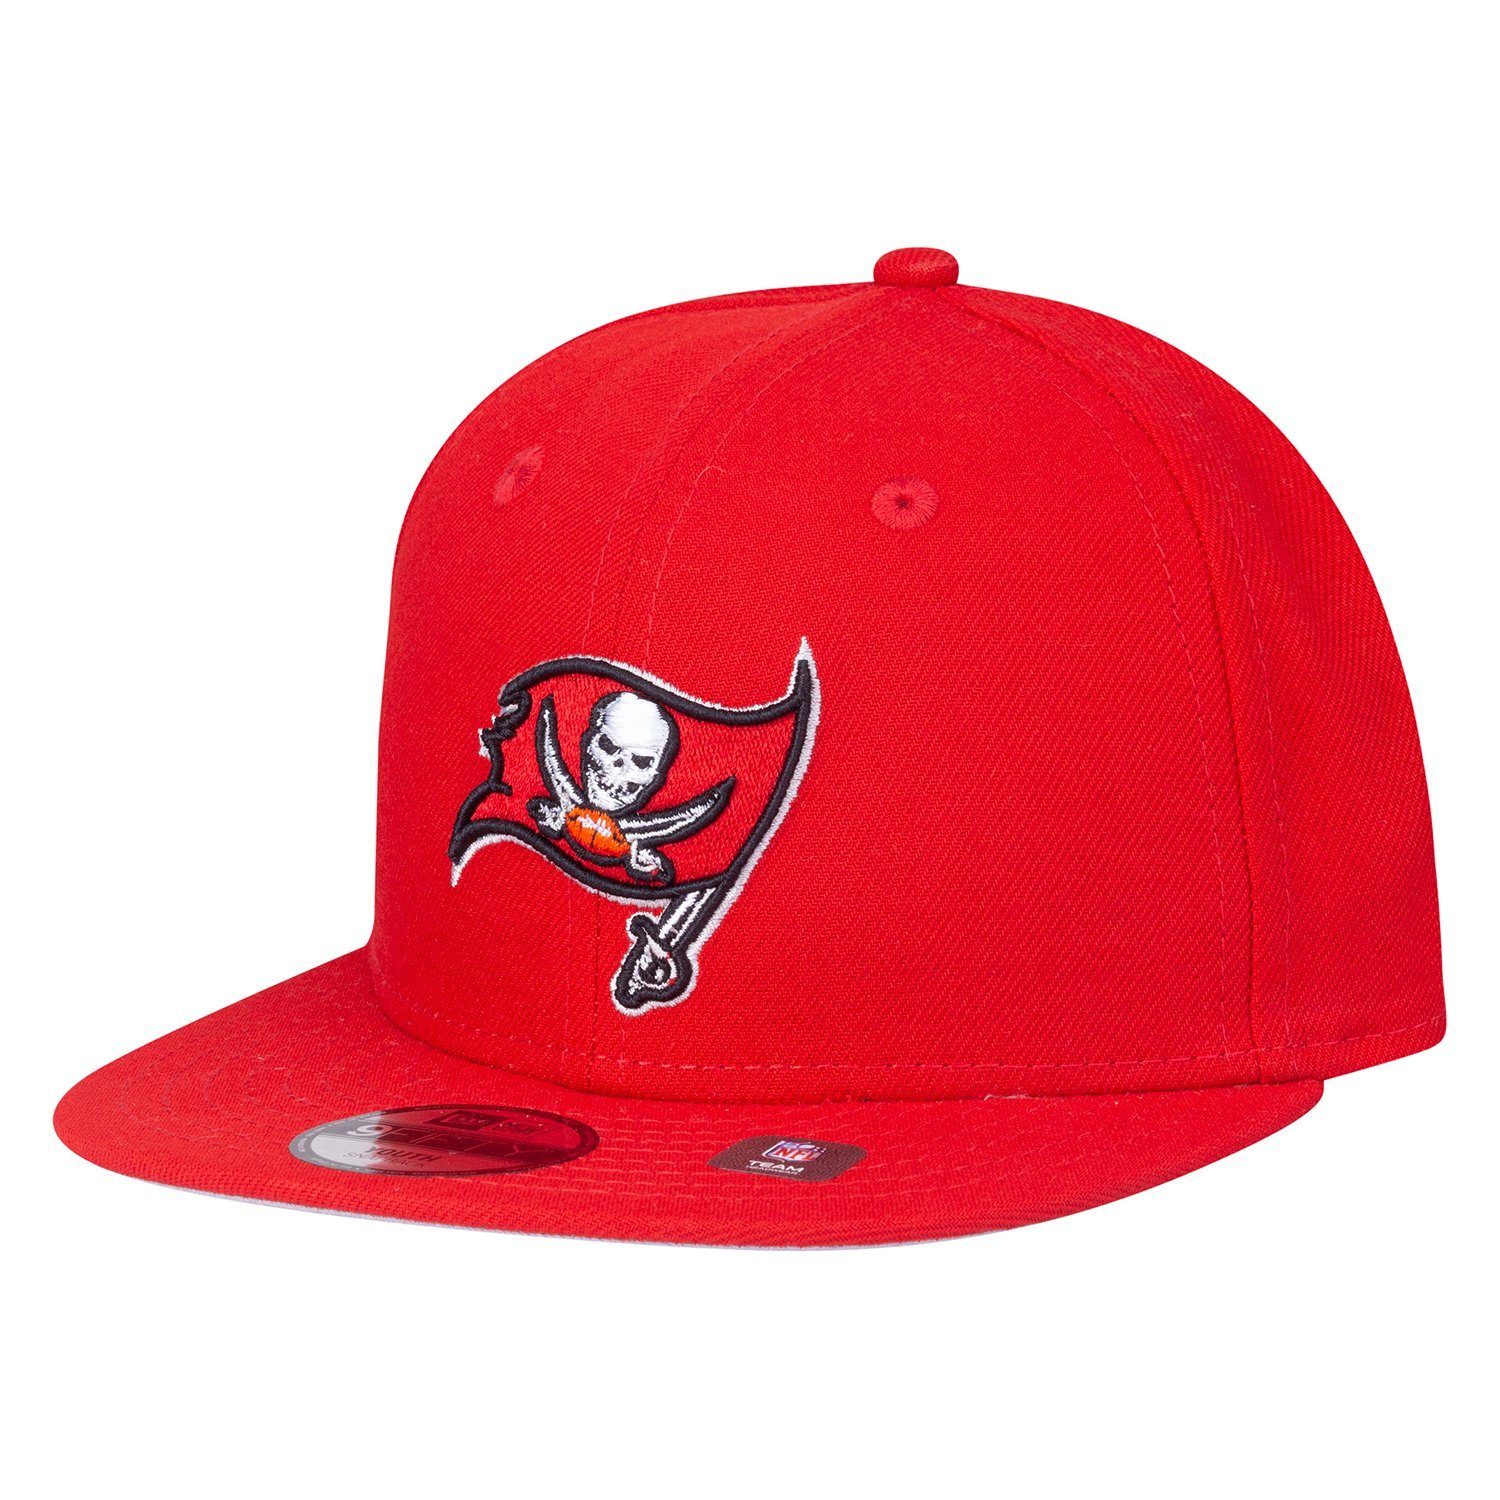 New Era Jugend Cap Teams Buccaneers Tampa Bay RED 9Fifty NFL Baseball